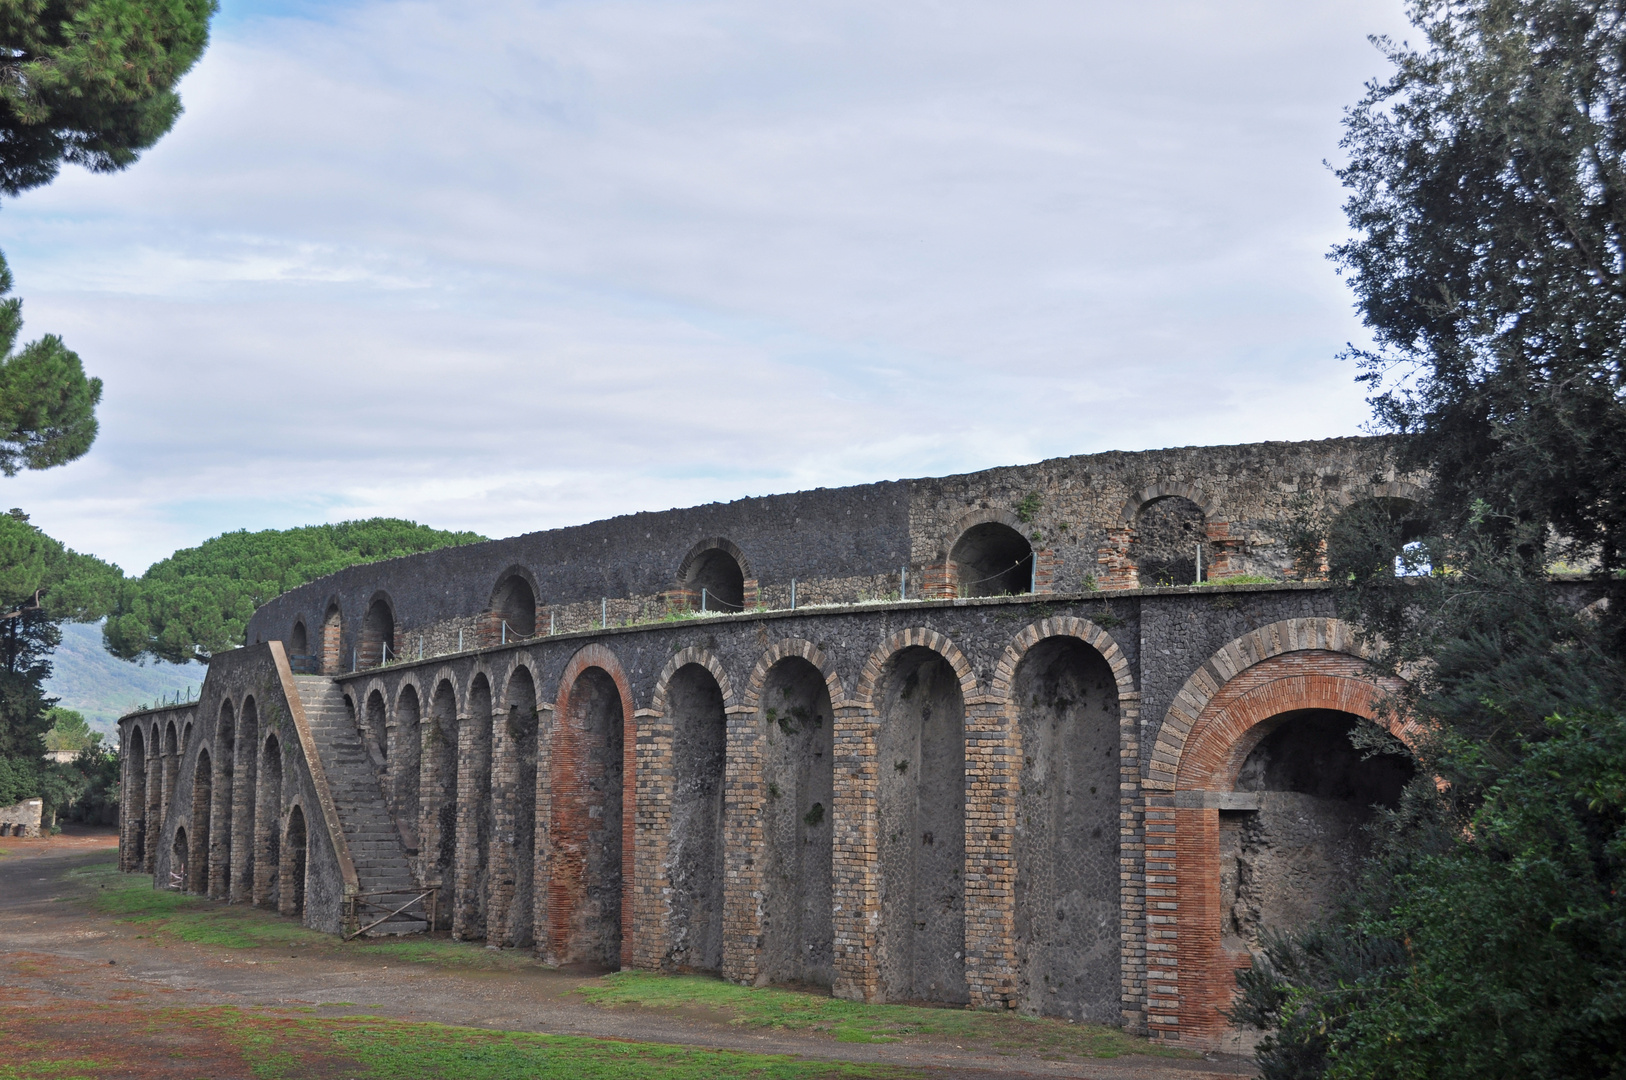 Pompeji - Amphitheater